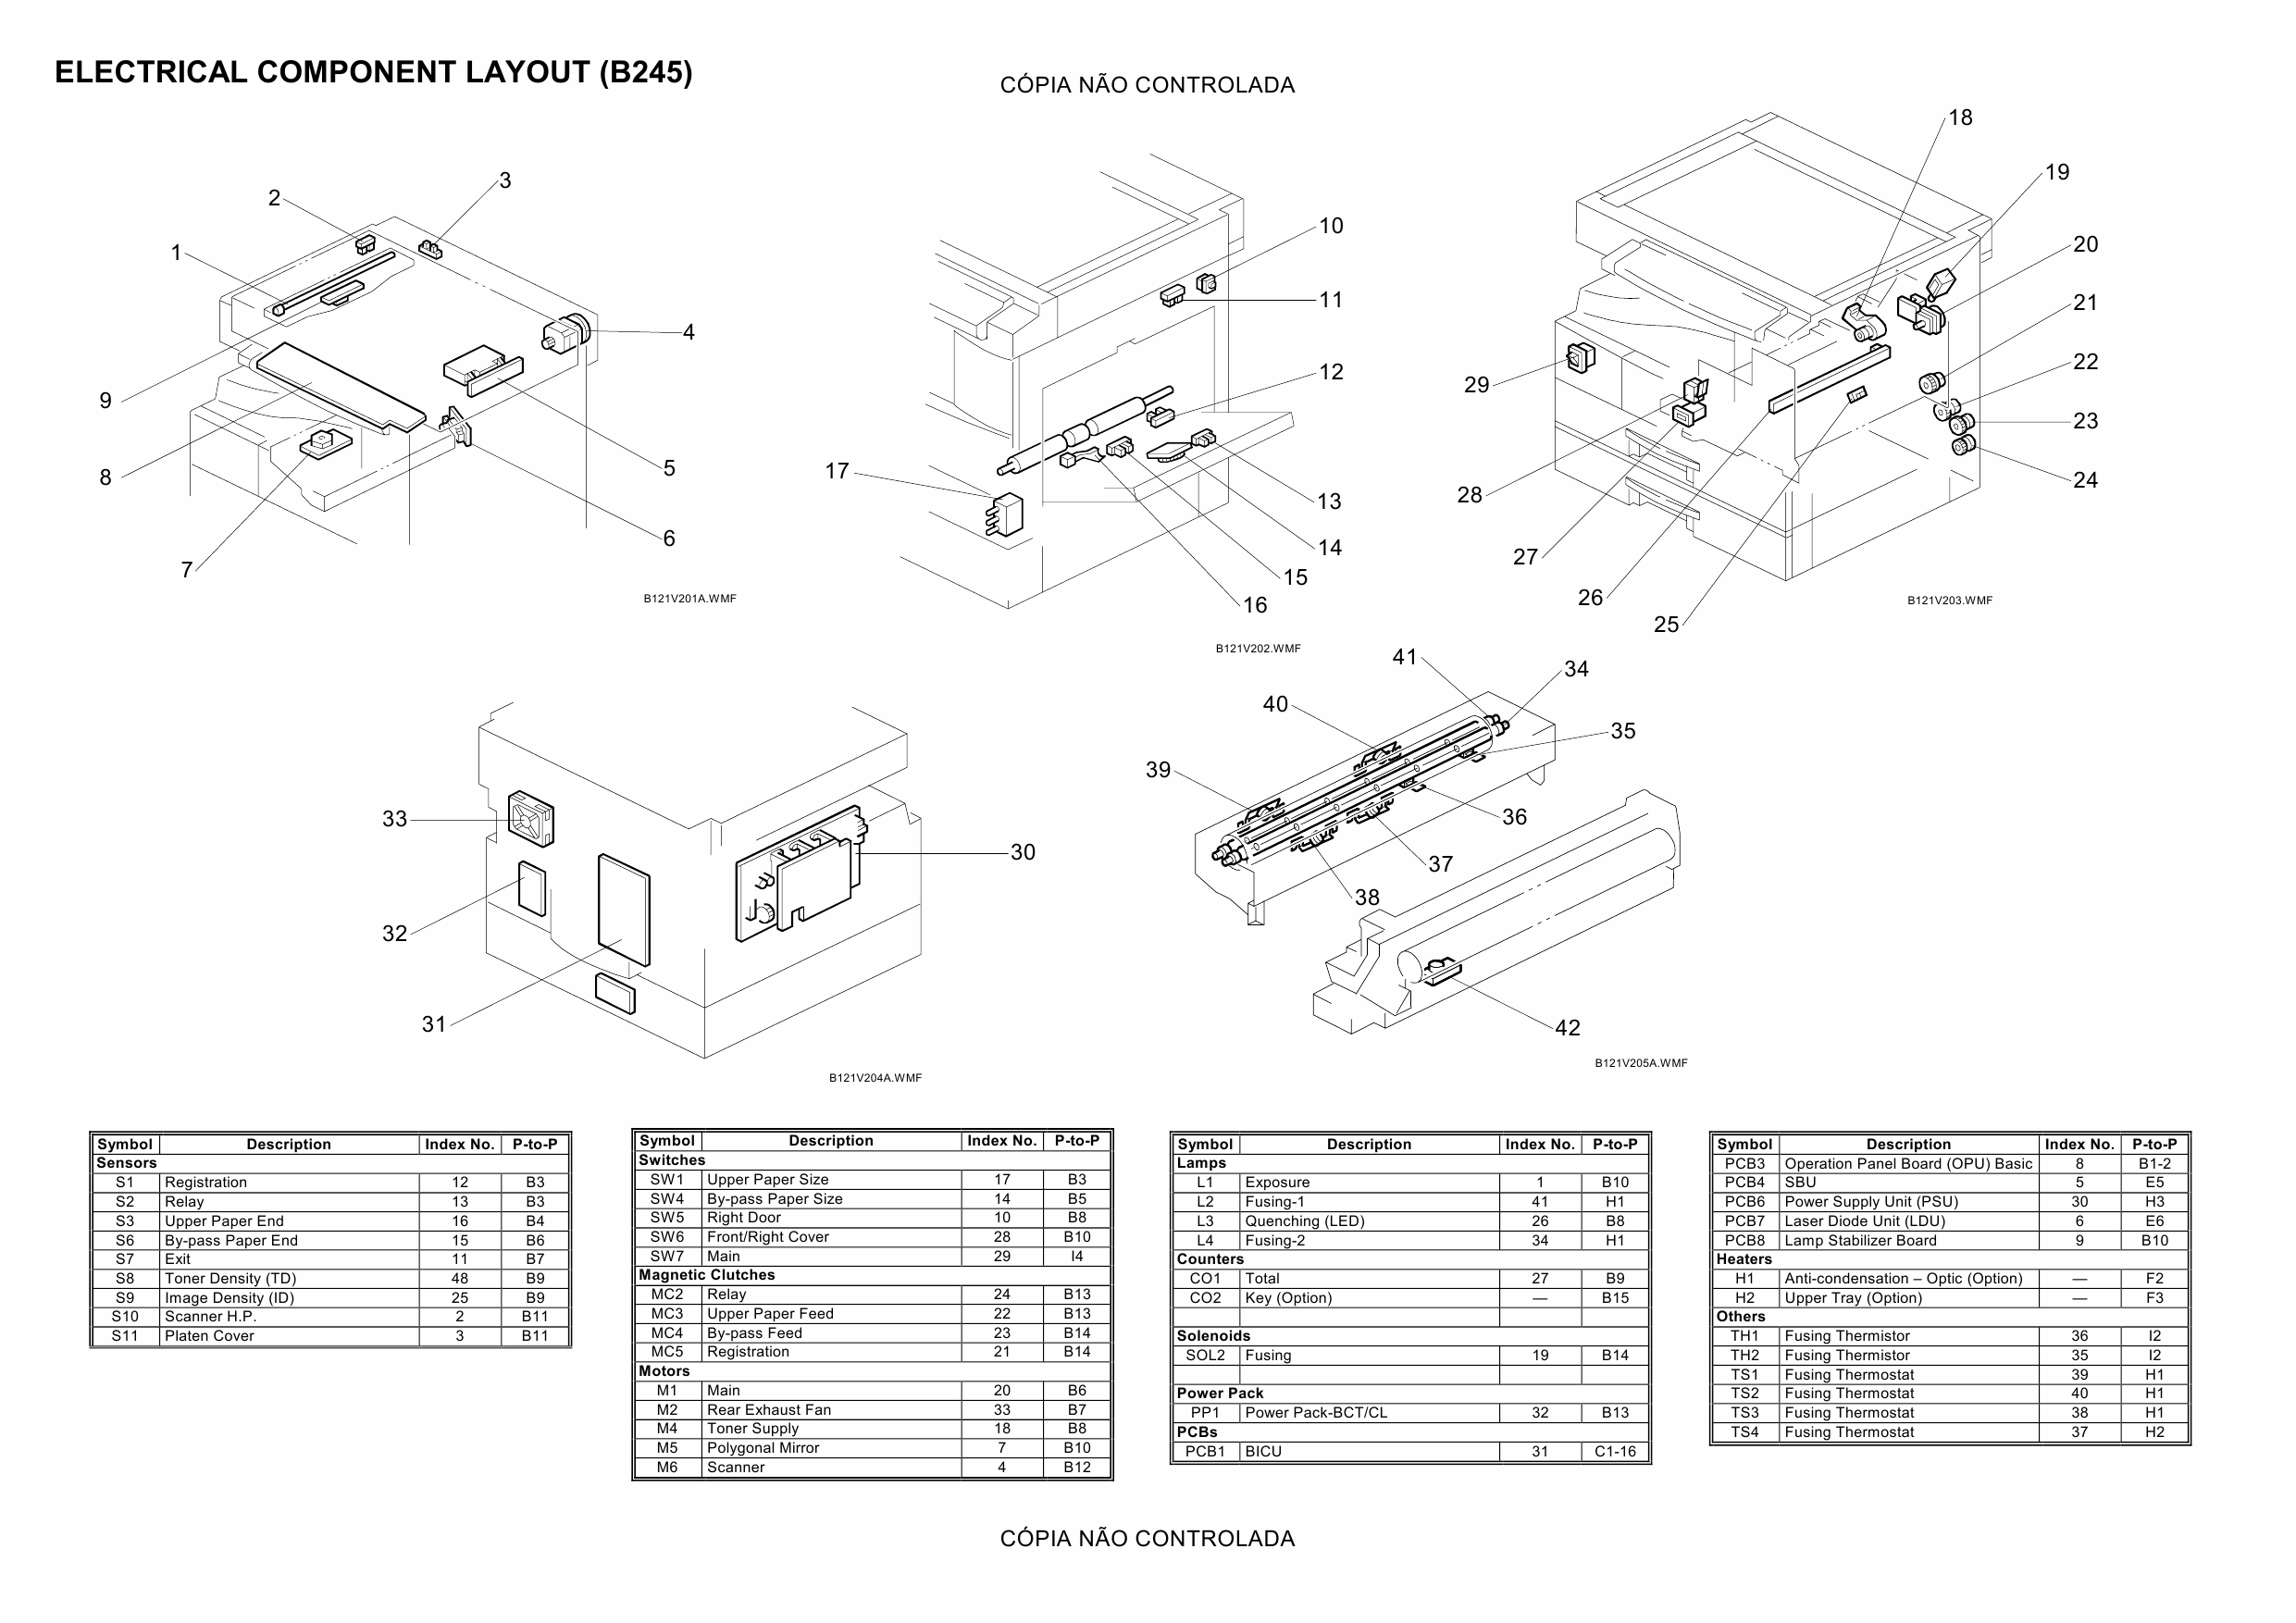 RICOH Aficio MP-1500 B245 Circuit Diagram-2